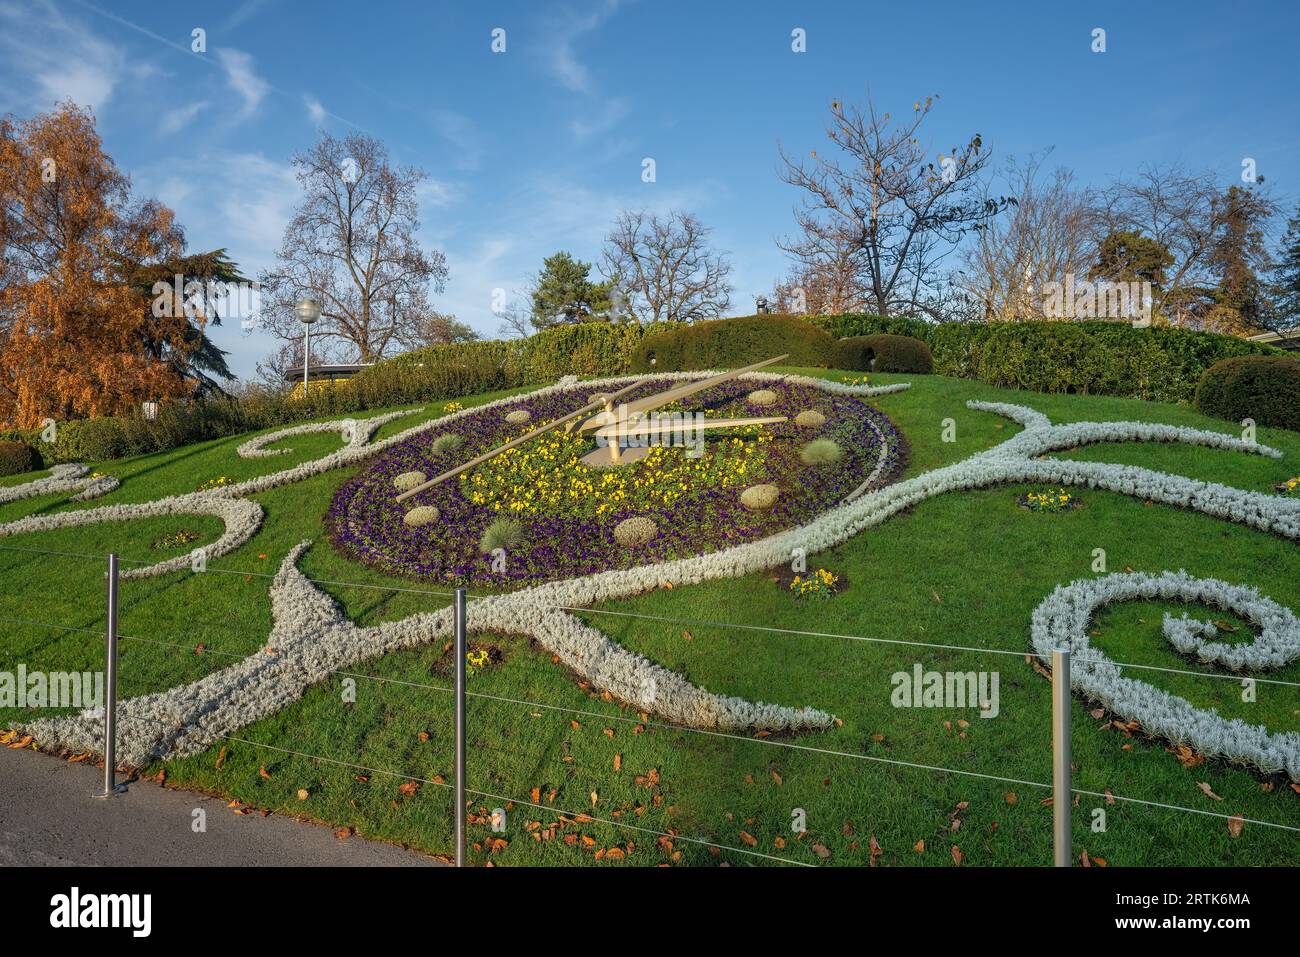 Orologio dei fiori al parco Jardin Anglais (Giardino inglese) - Ginevra, Svizzera Foto Stock